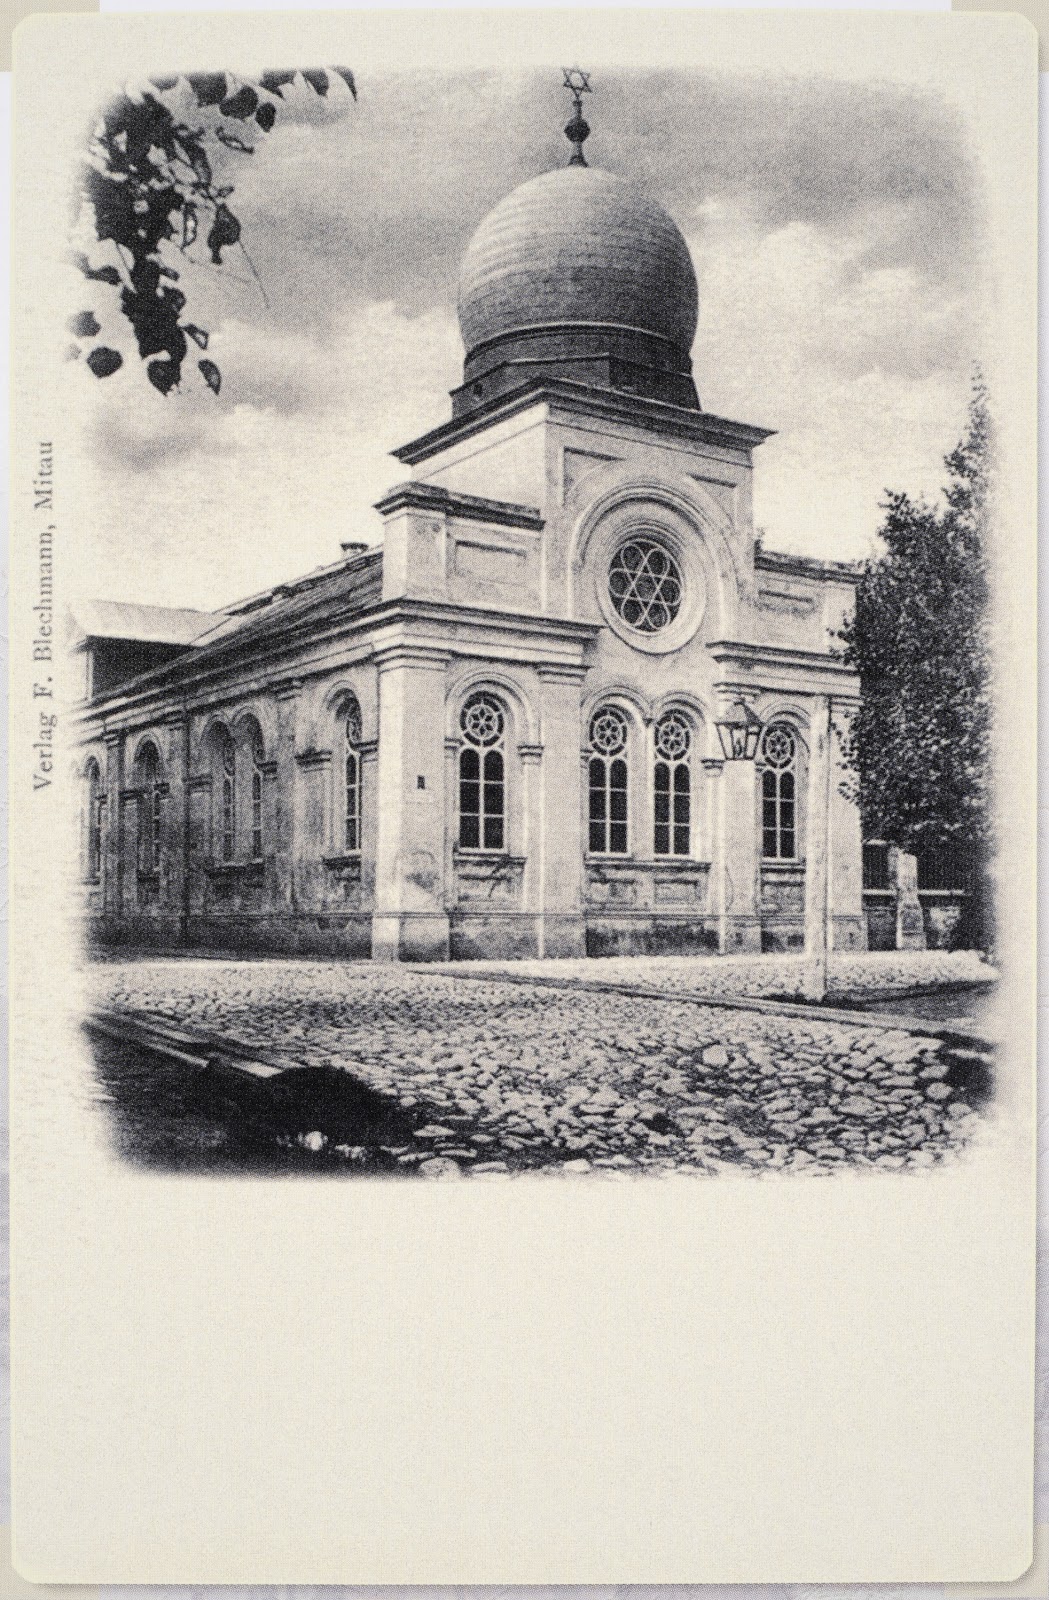 http://3.bp.blogspot.com/-mCBMUAcK9aI/T0cAqGkC5eI/AAAAAAAAWKA/KSQX-FlWwDI/s1600/Jelgava_(Mitava)_Latvia_Great_Synagogue_postcard_late_19th_cent_frm_V_Likhodedov_Synagogues_p210%2B(2).JPG